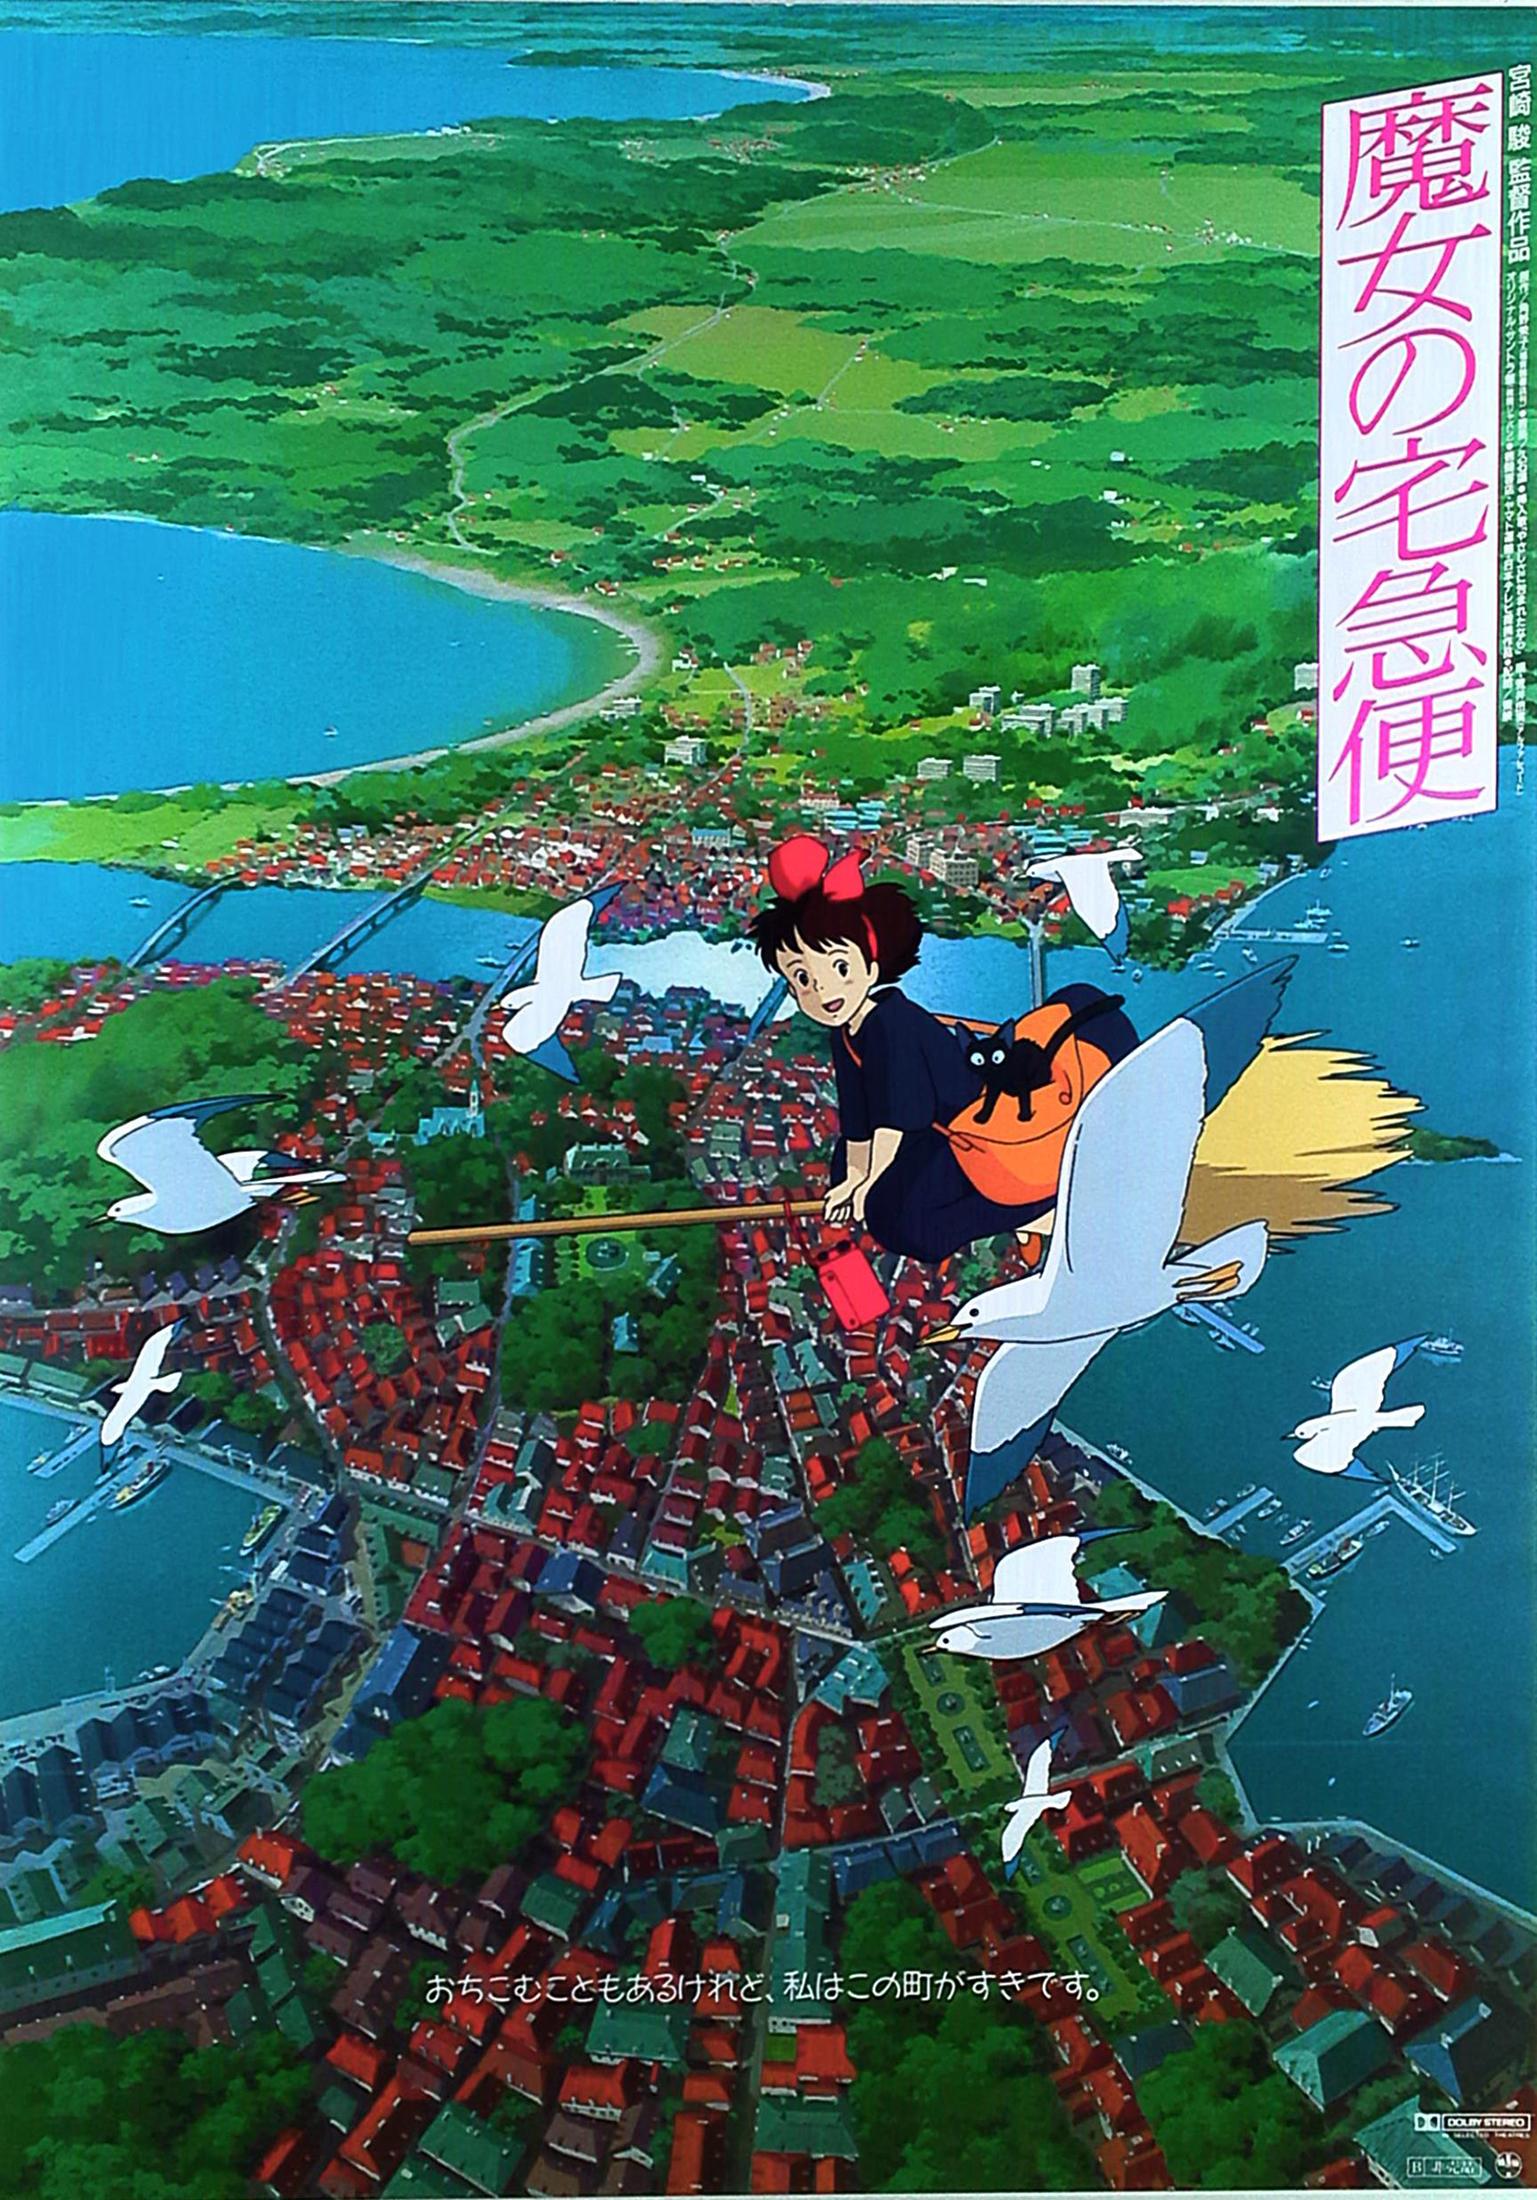 Kiki's Delivery Service Original Large Vintage Poster, Miyazaki, Studio Ghibli - Blue Print by Unknown